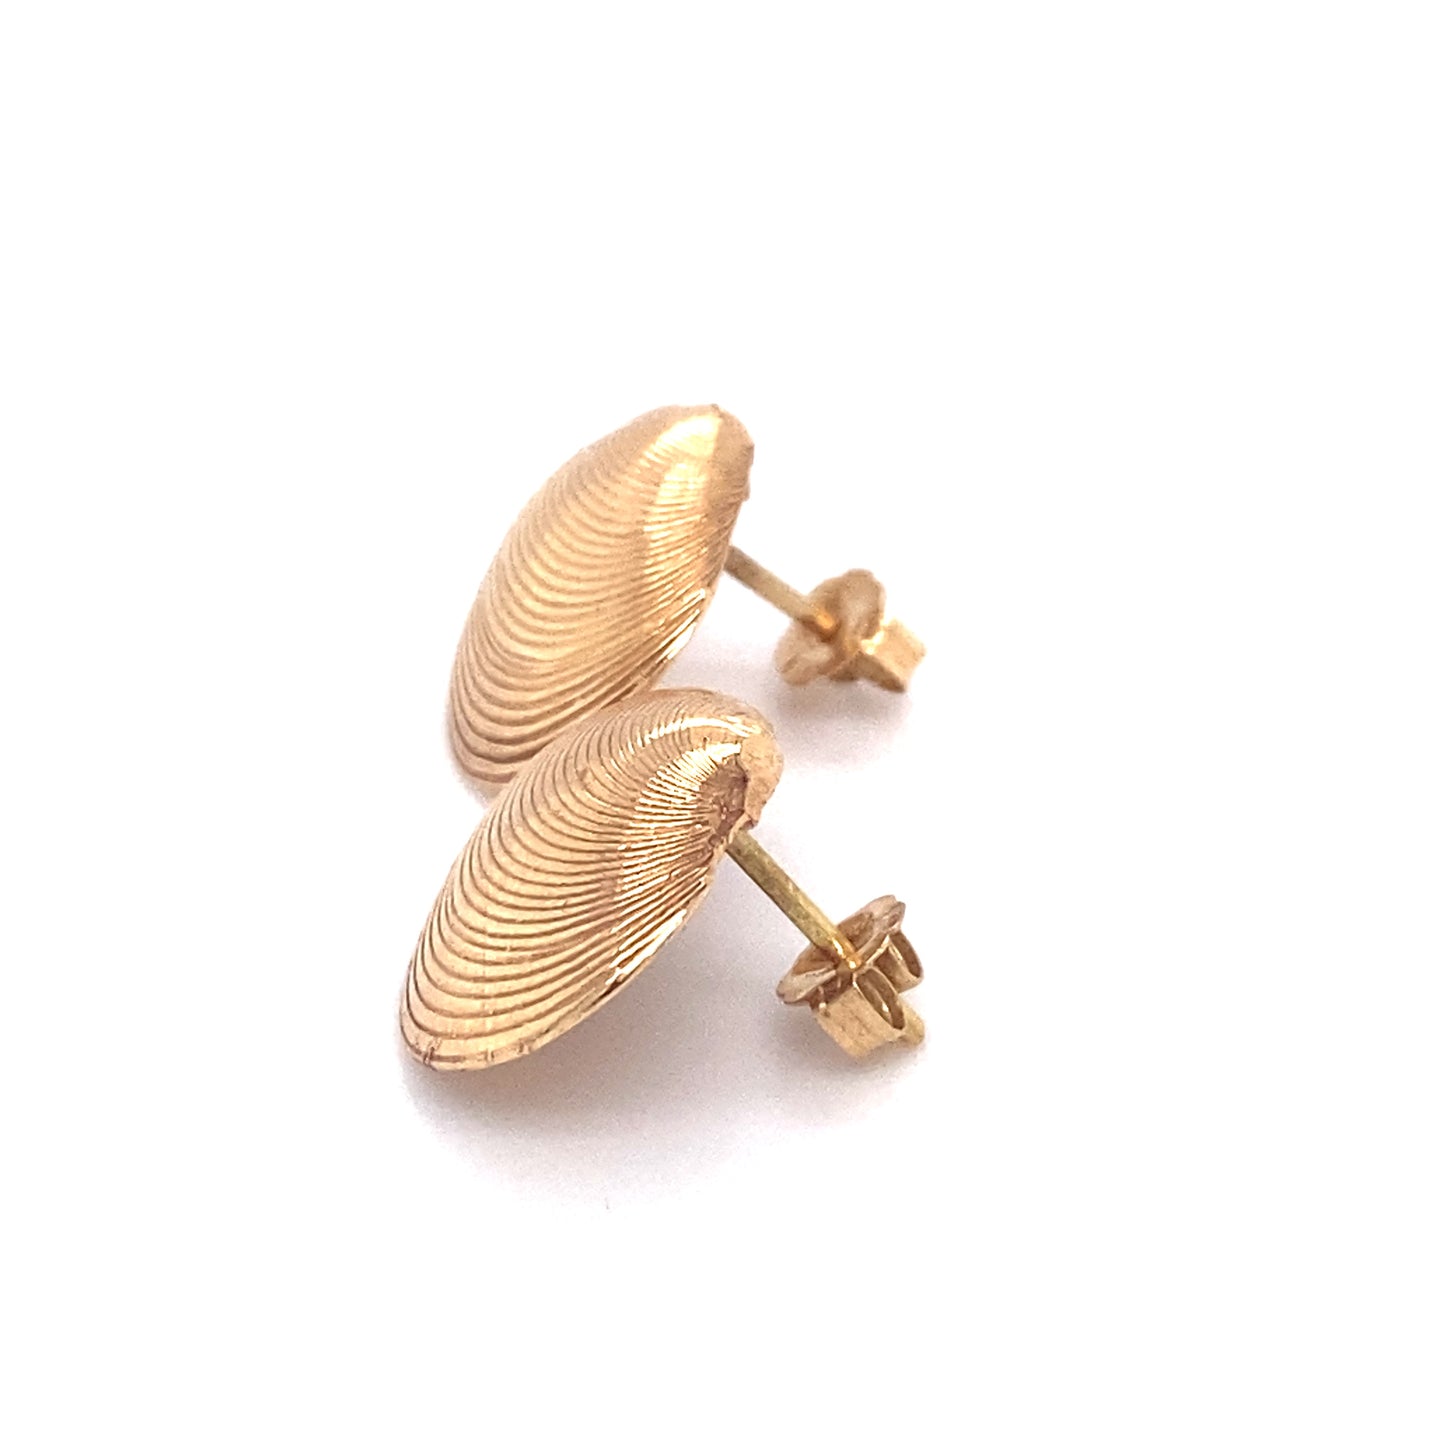 Circa 1950s Scallop Seashell Stud Earrings in 14K Gold